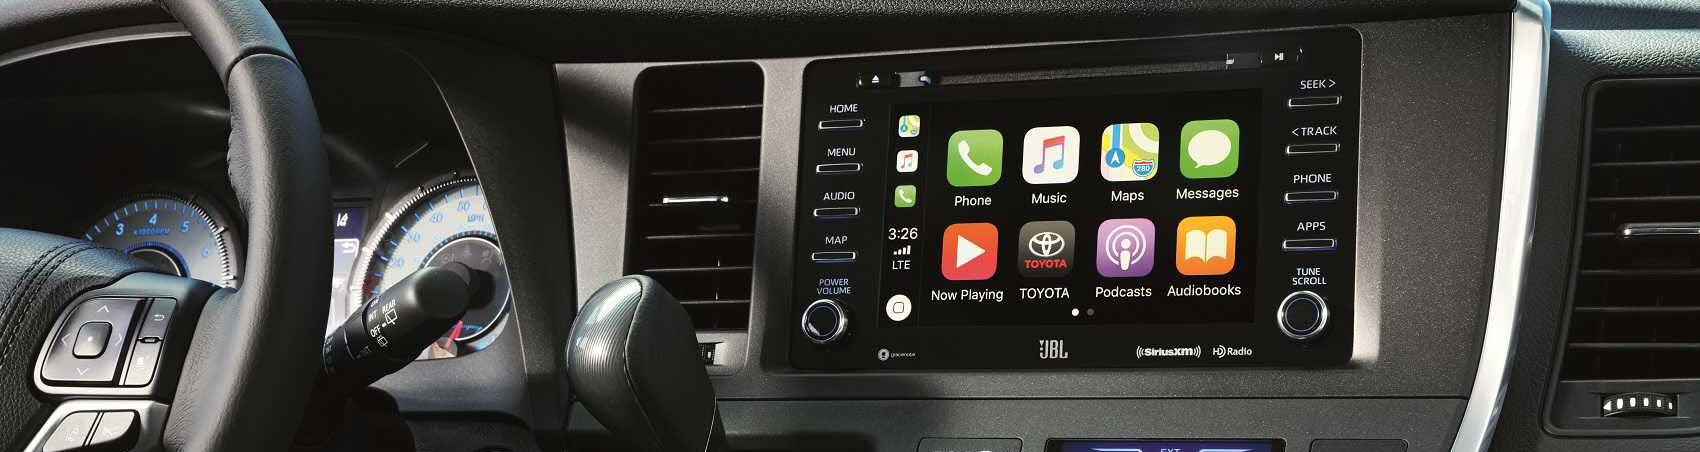 2020 Toyota Sienna Apple Car Play